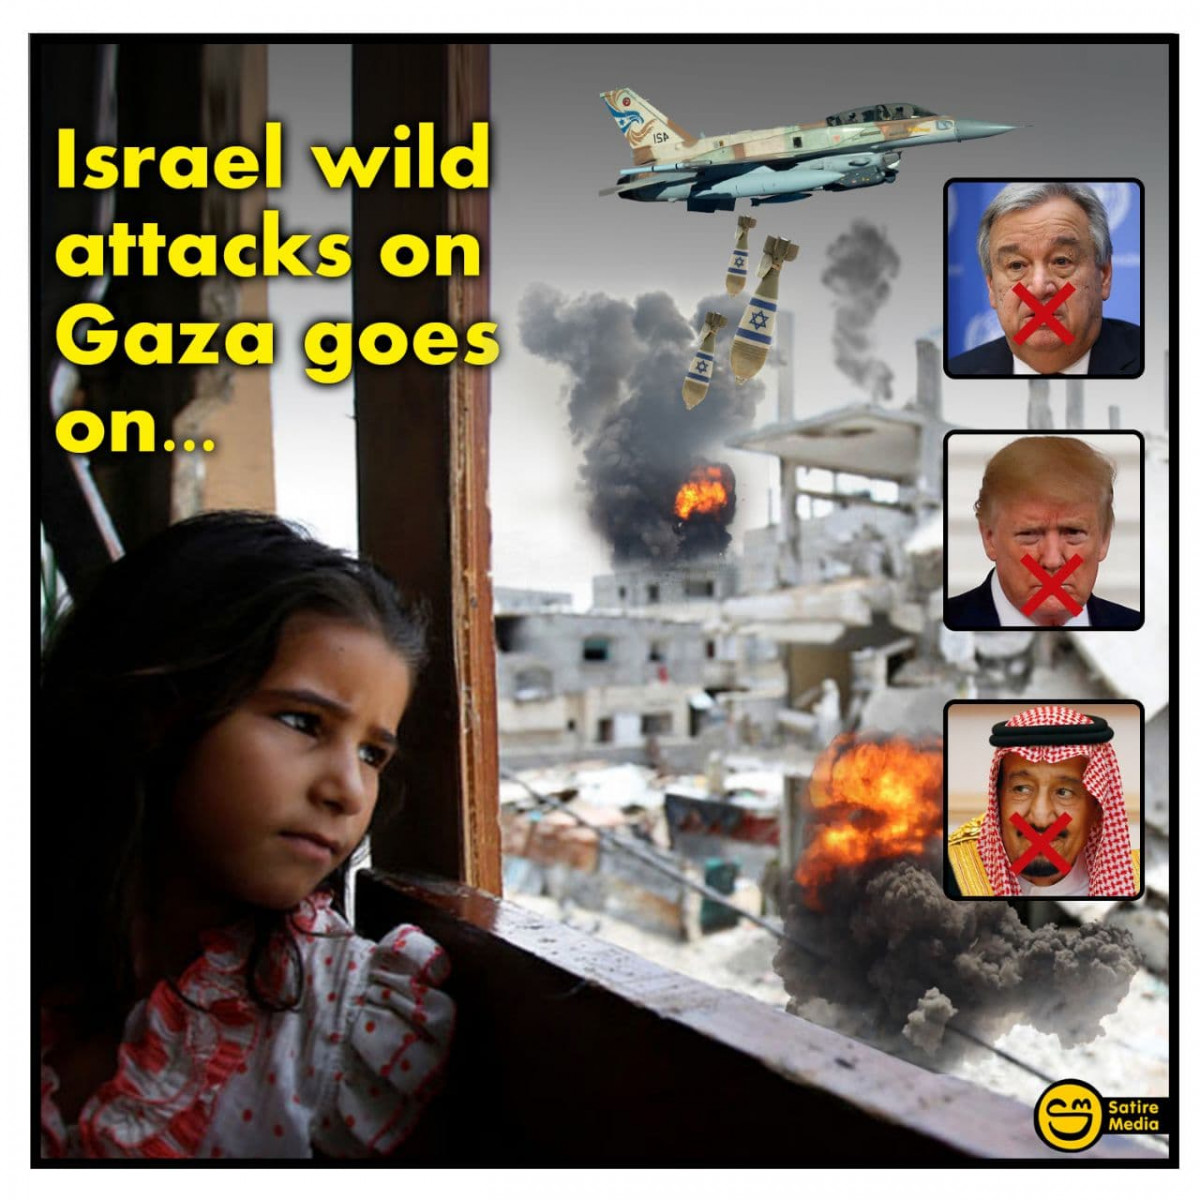 Israel wild attacks on Gaza goes on